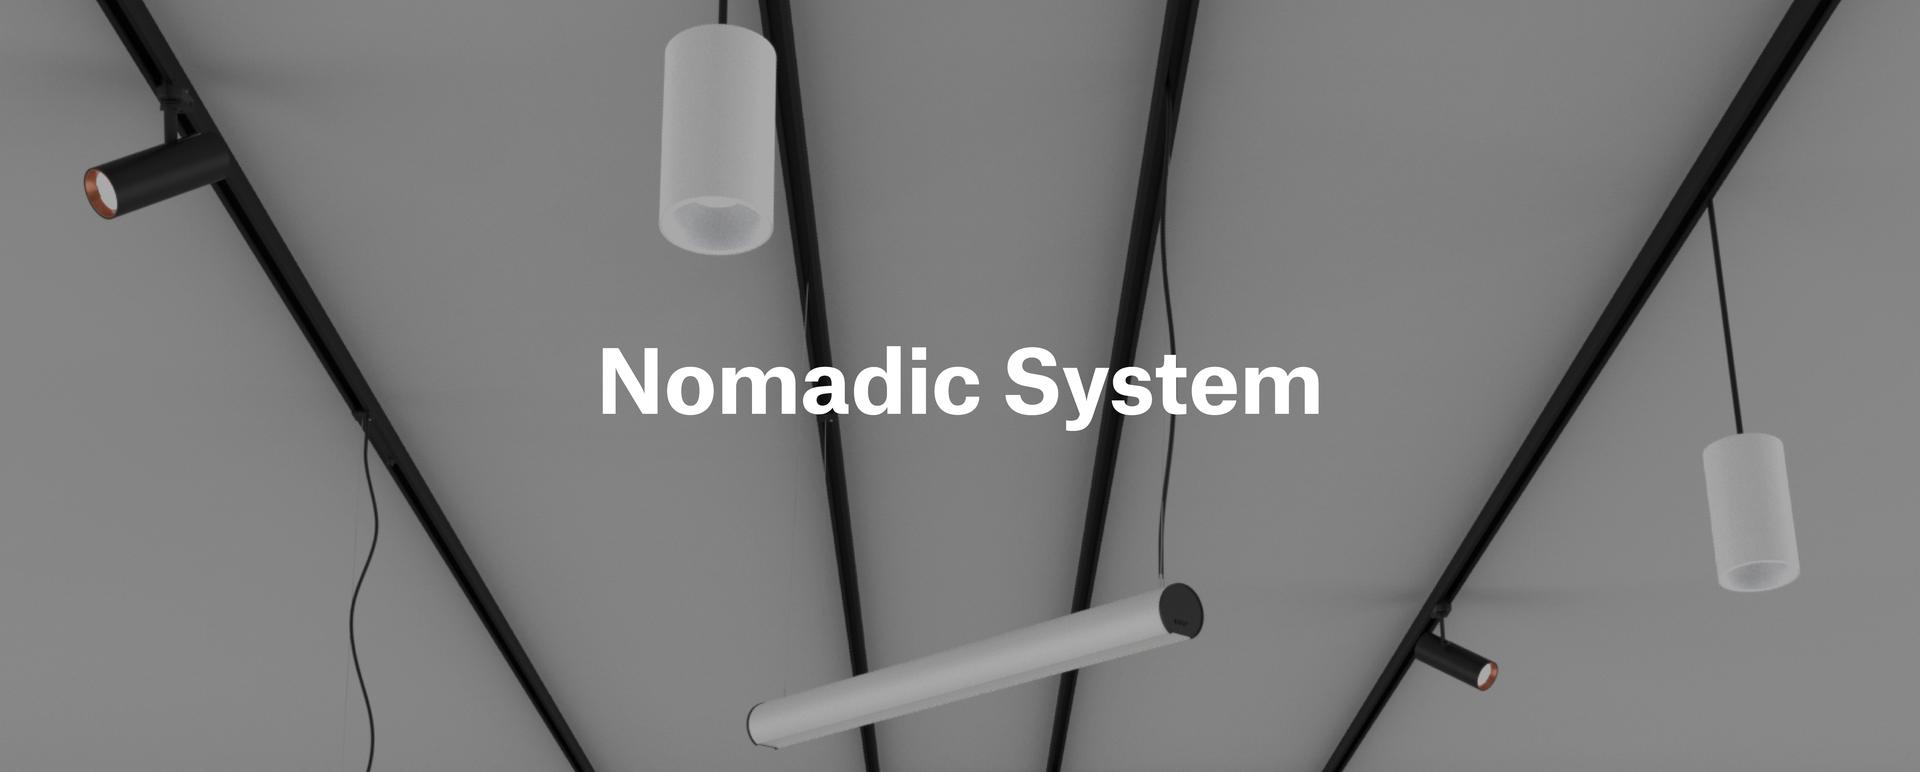 Nomadic System-1